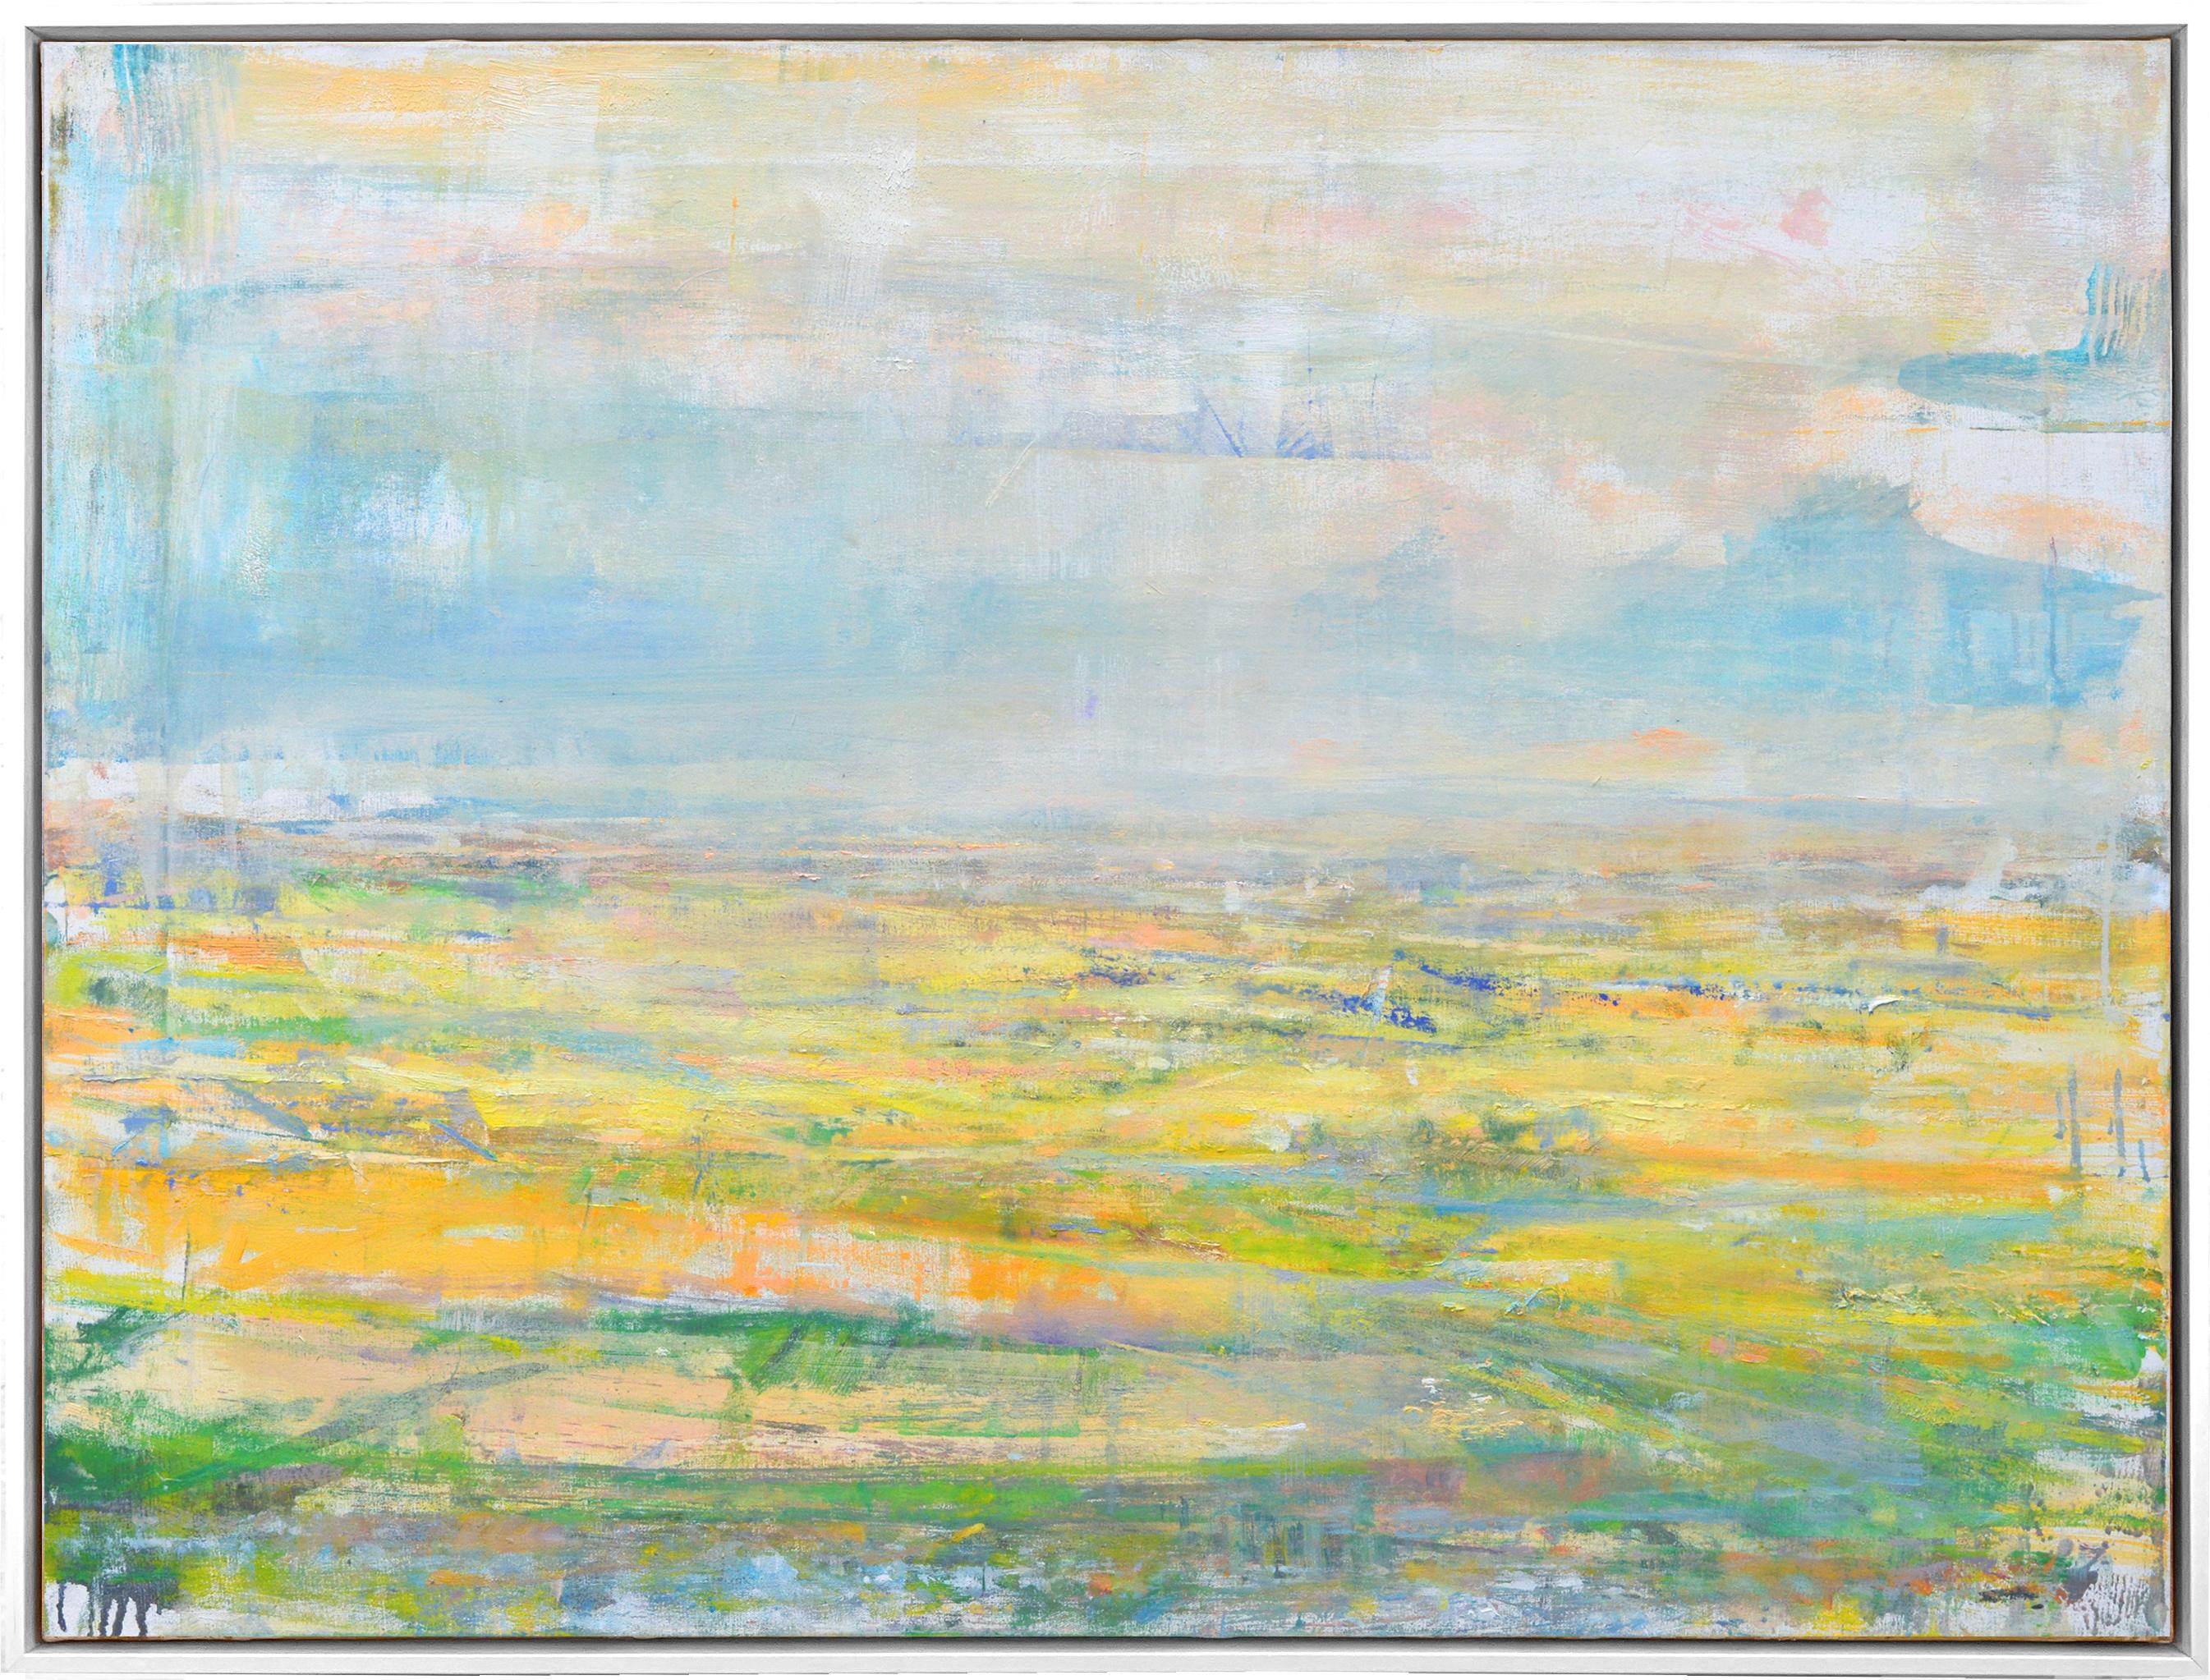 Gloria Sáez Landscape Painting - Gloria Saez, Campos de Castilla, Oil on canvas, 2019